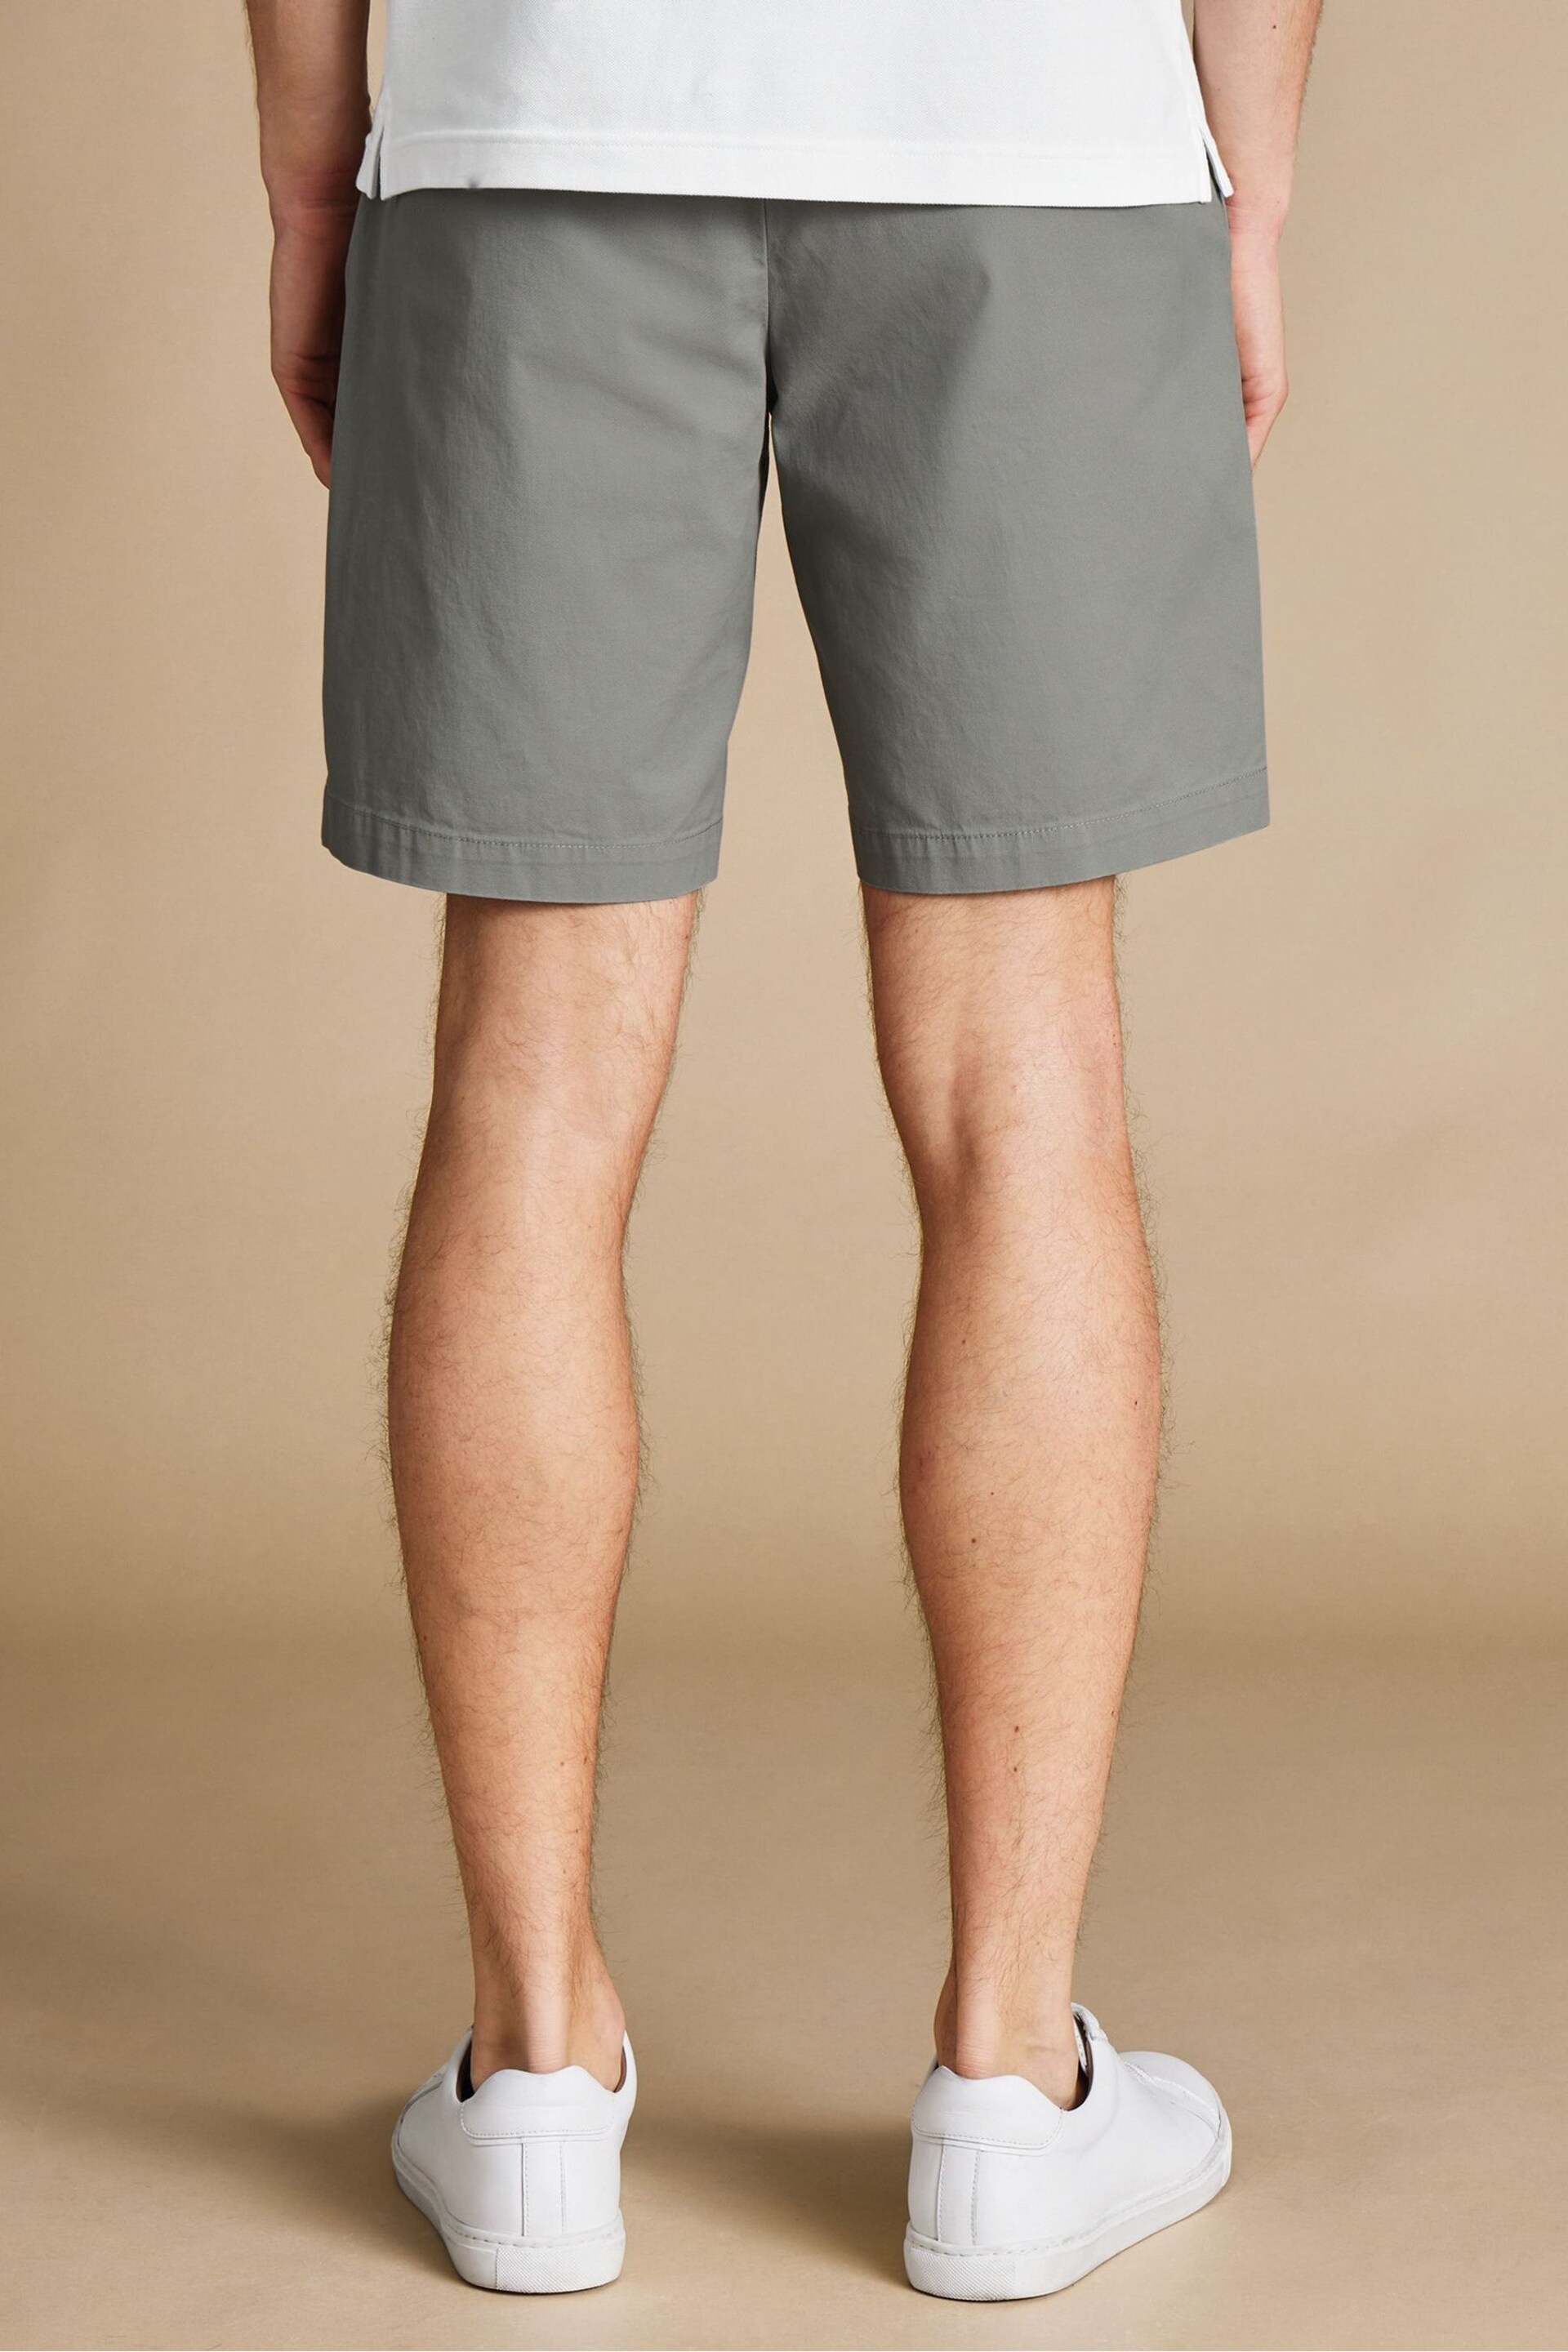 Charles Tyrwhitt Grey Cotton Shorts - Image 2 of 6